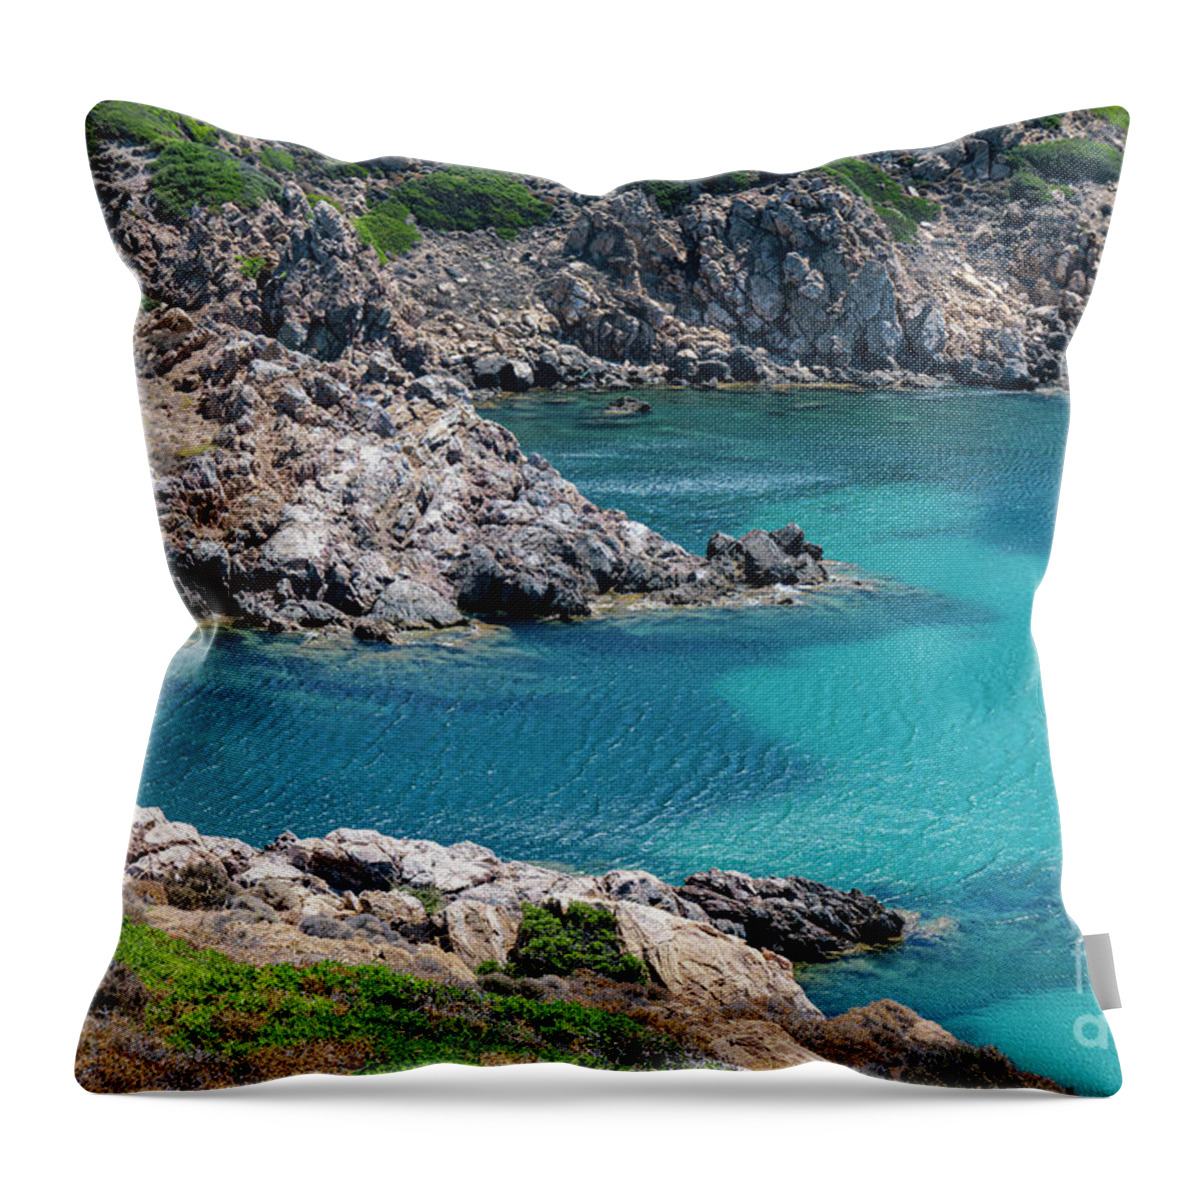 Bozcaada Island Throw Pillow featuring the photograph Bozcaada Coast Inlet Three by Bob Phillips